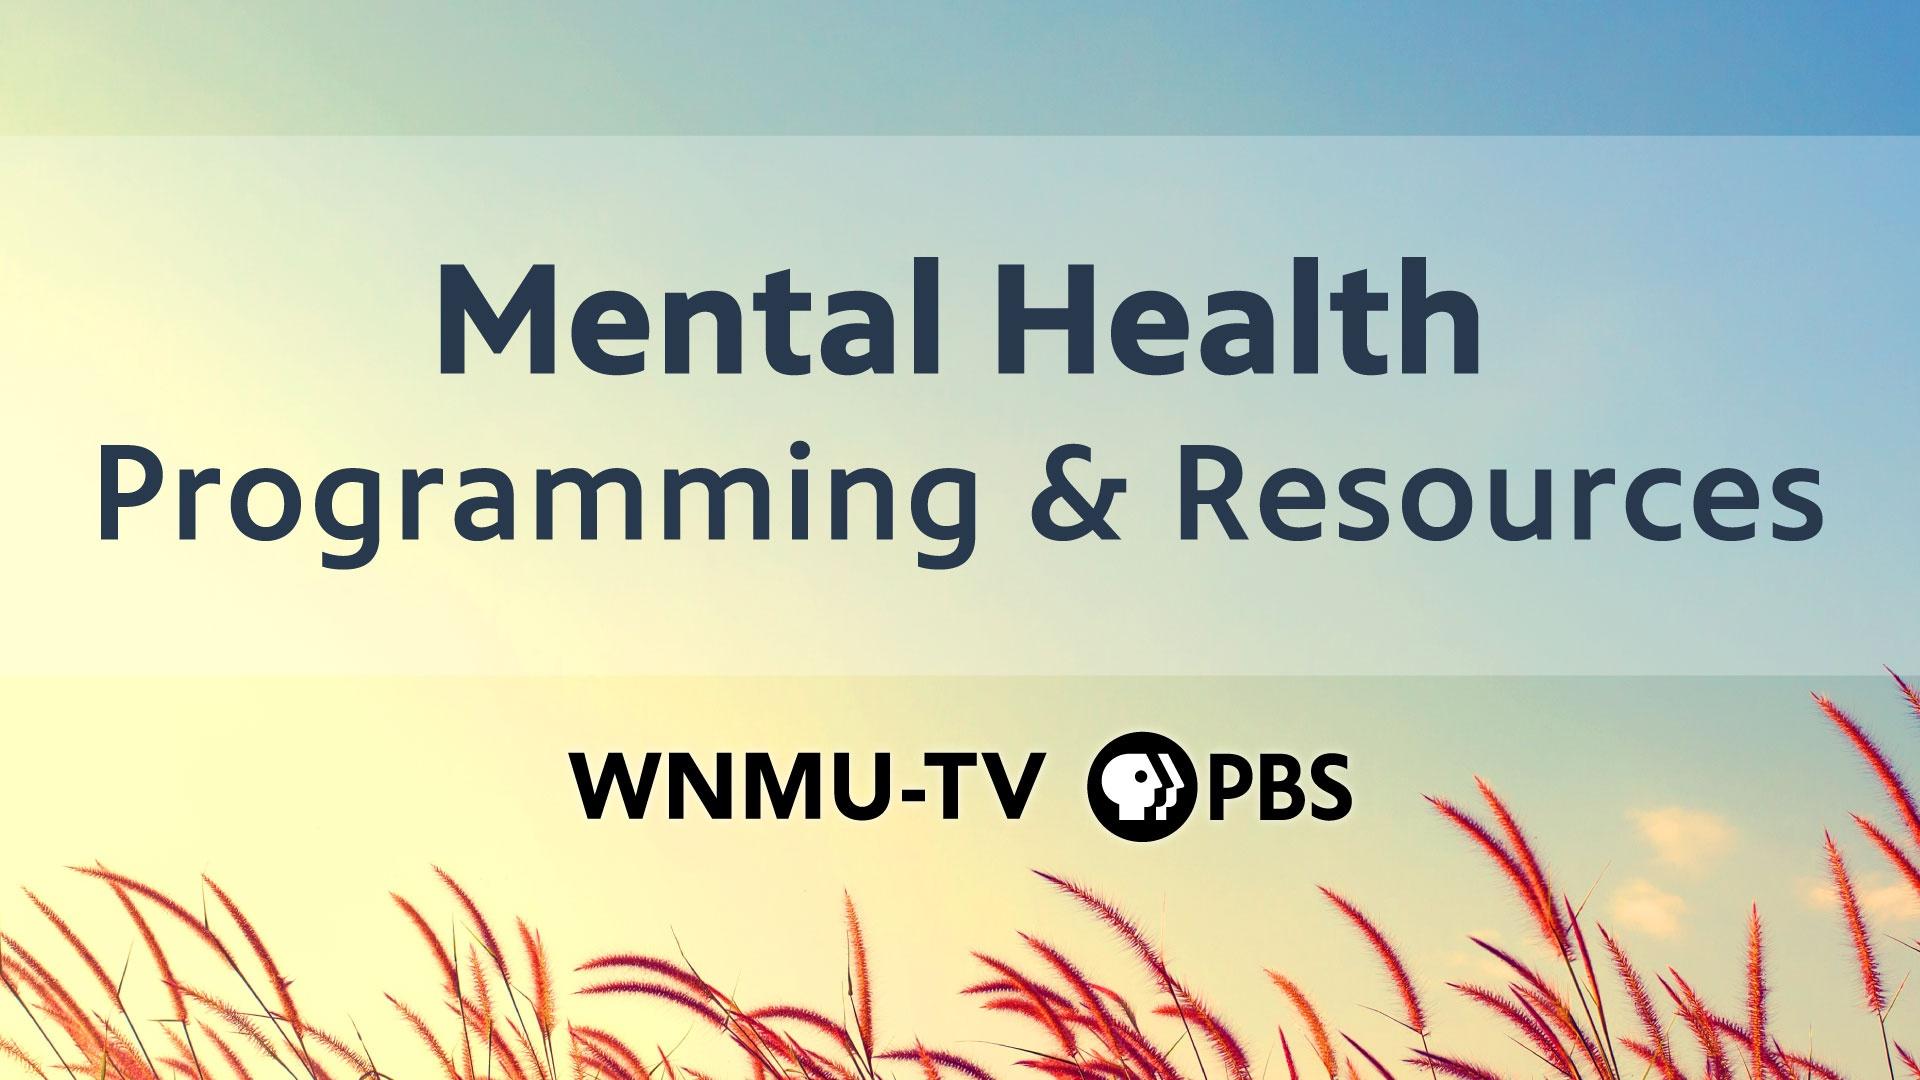 WNMU-TV Mental Health Programming & Resources